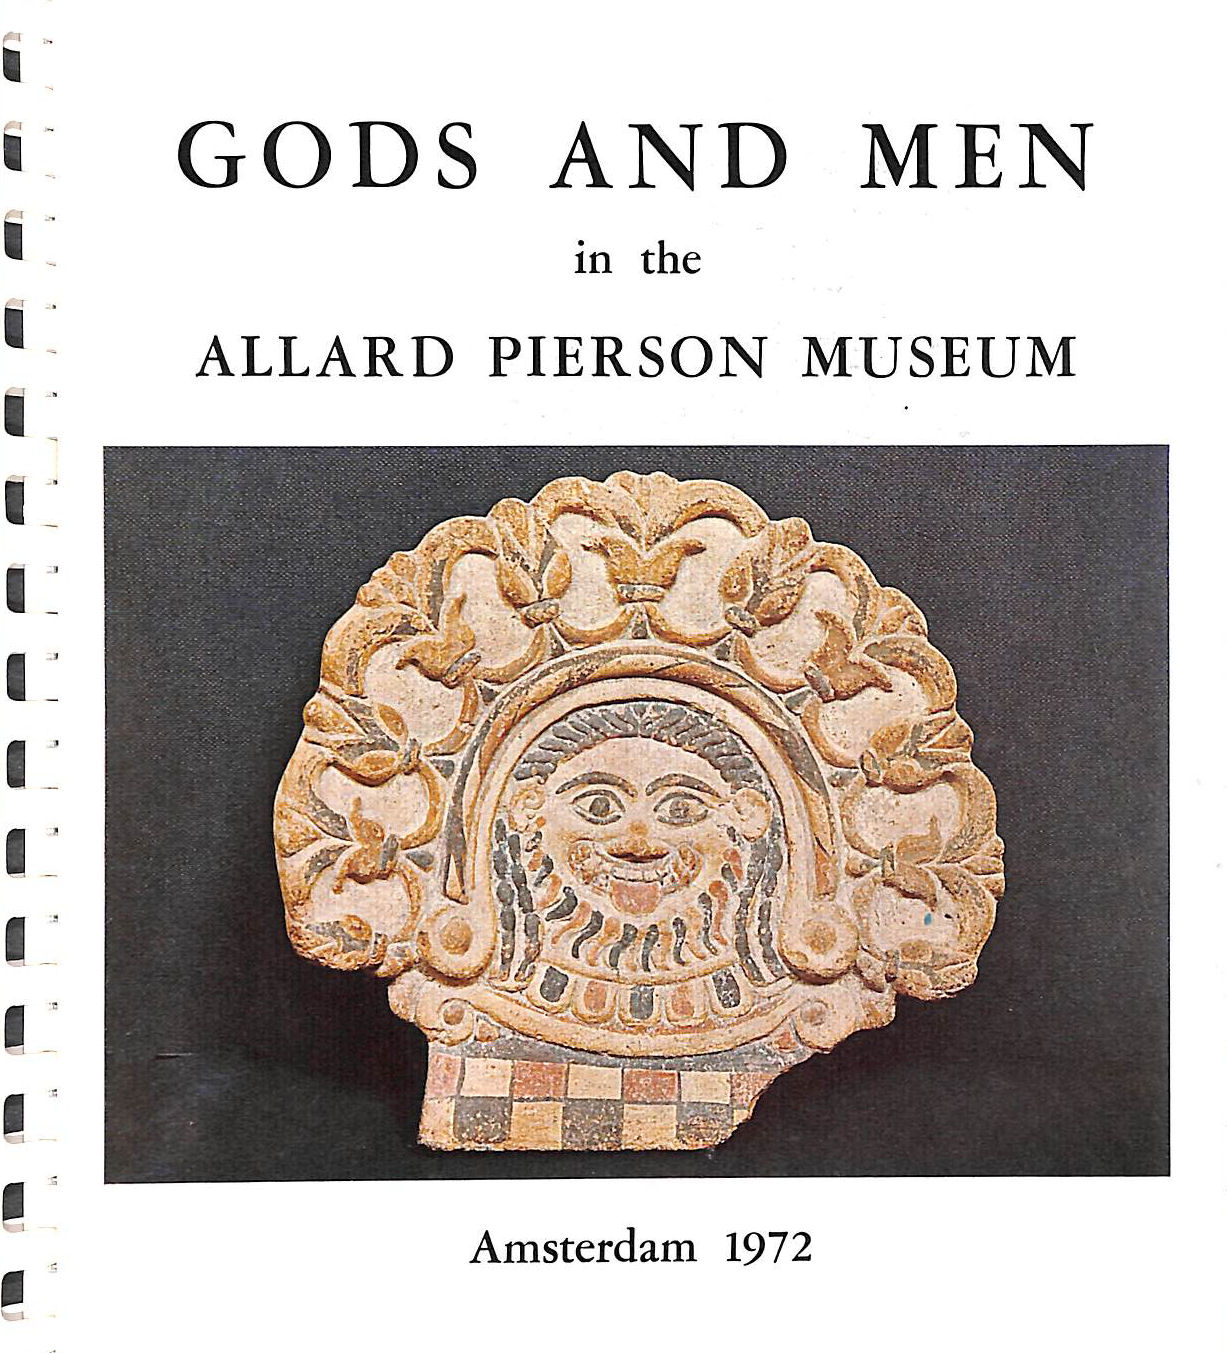 UNIVERSITY OF AMSTERDAM - Gods and Men in the Allard Pierson Museum